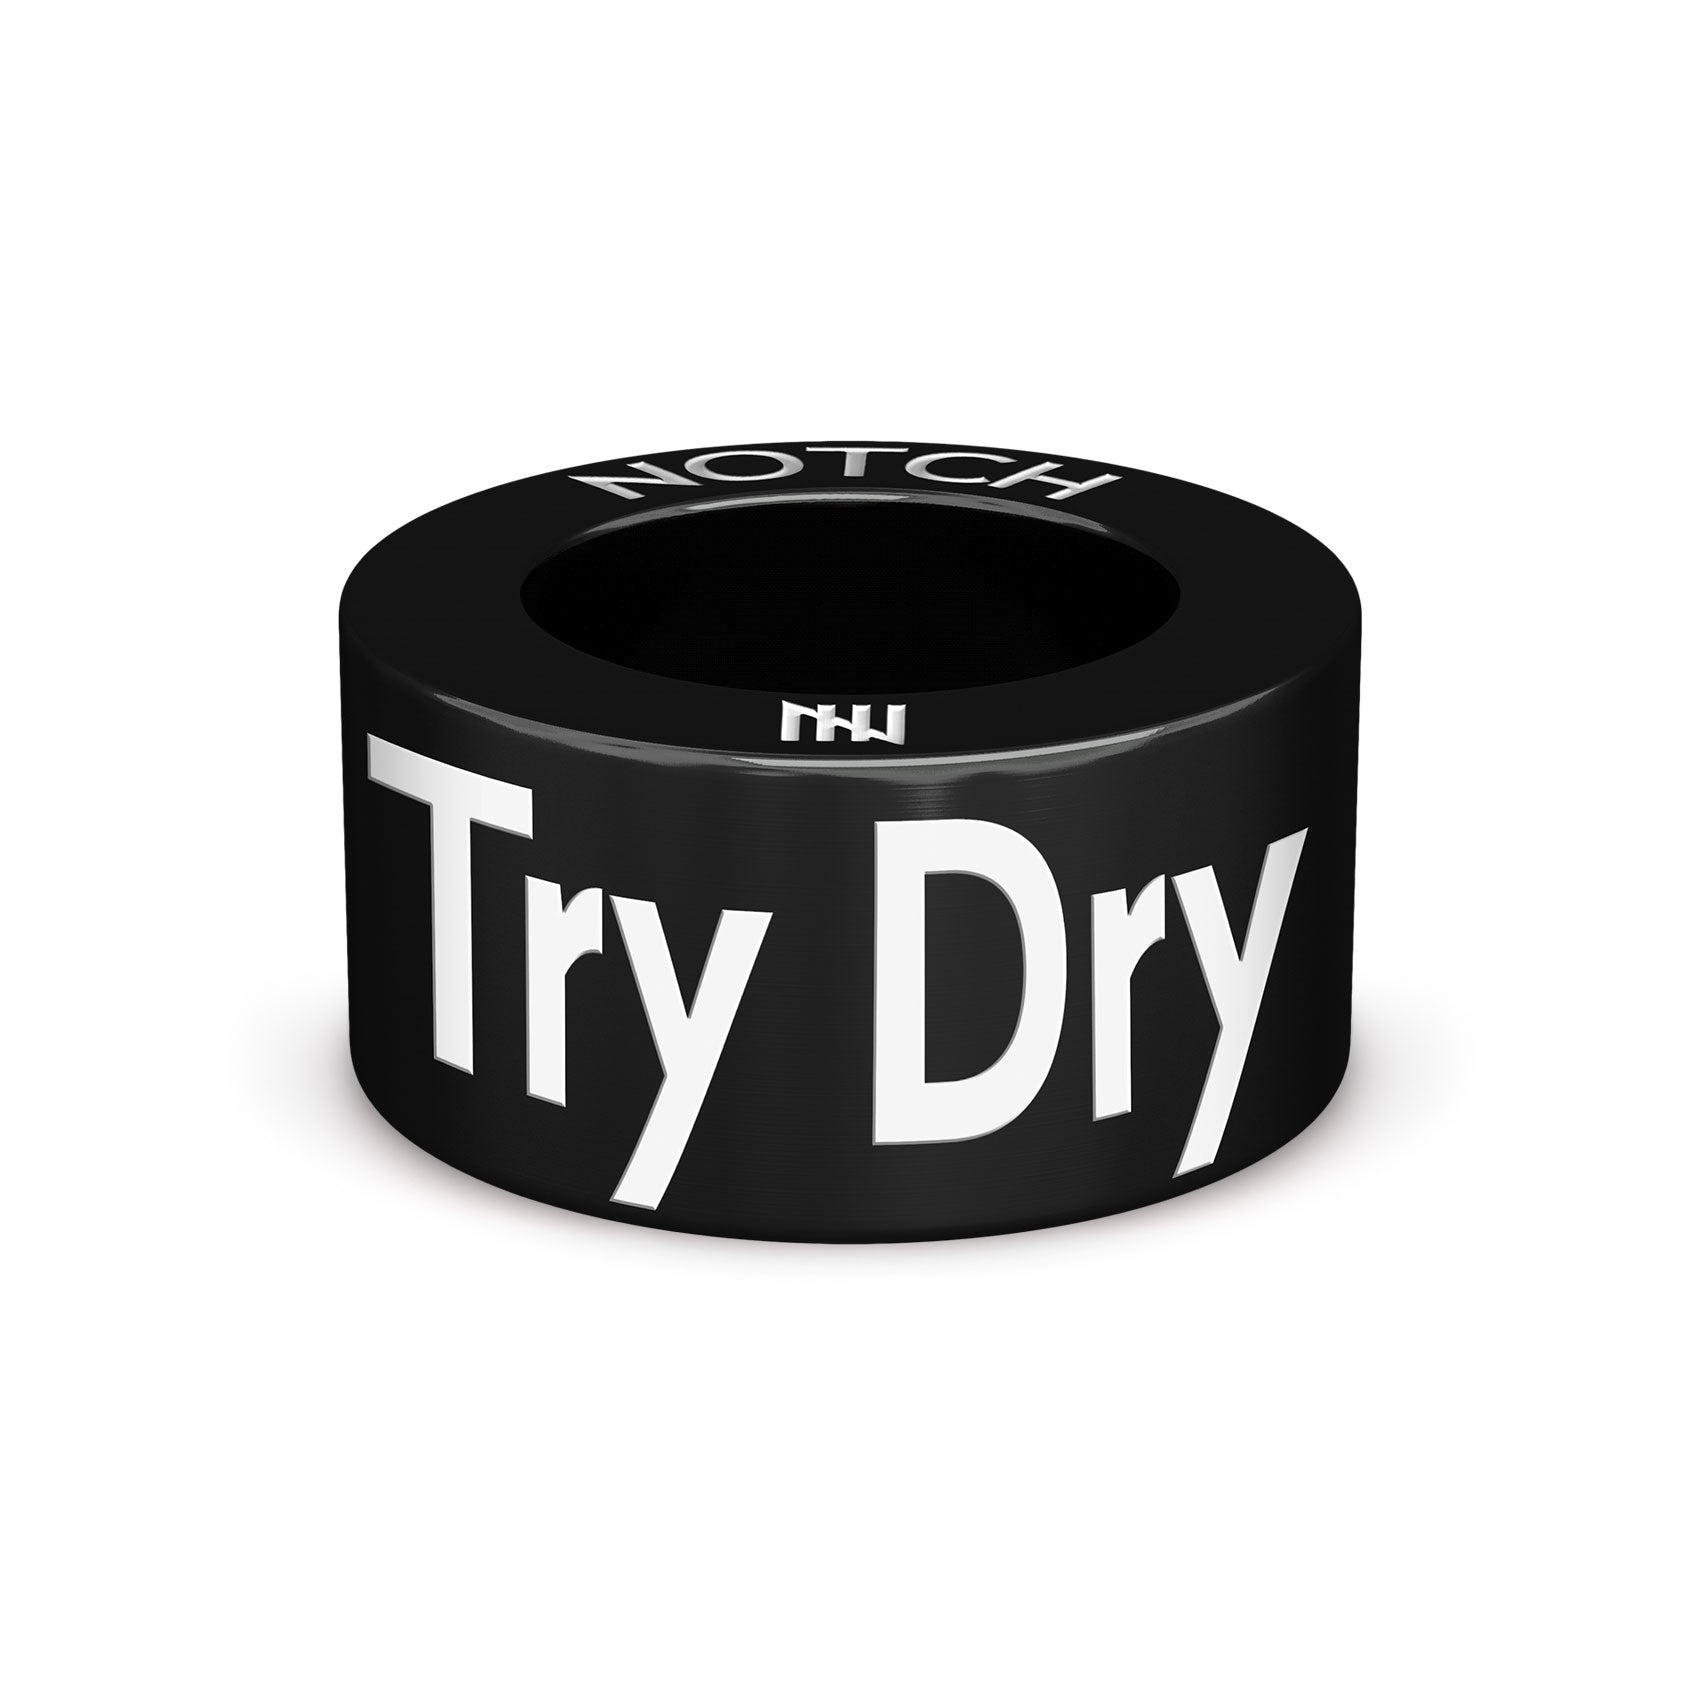 Try Dry NOTCH Charm (Black)